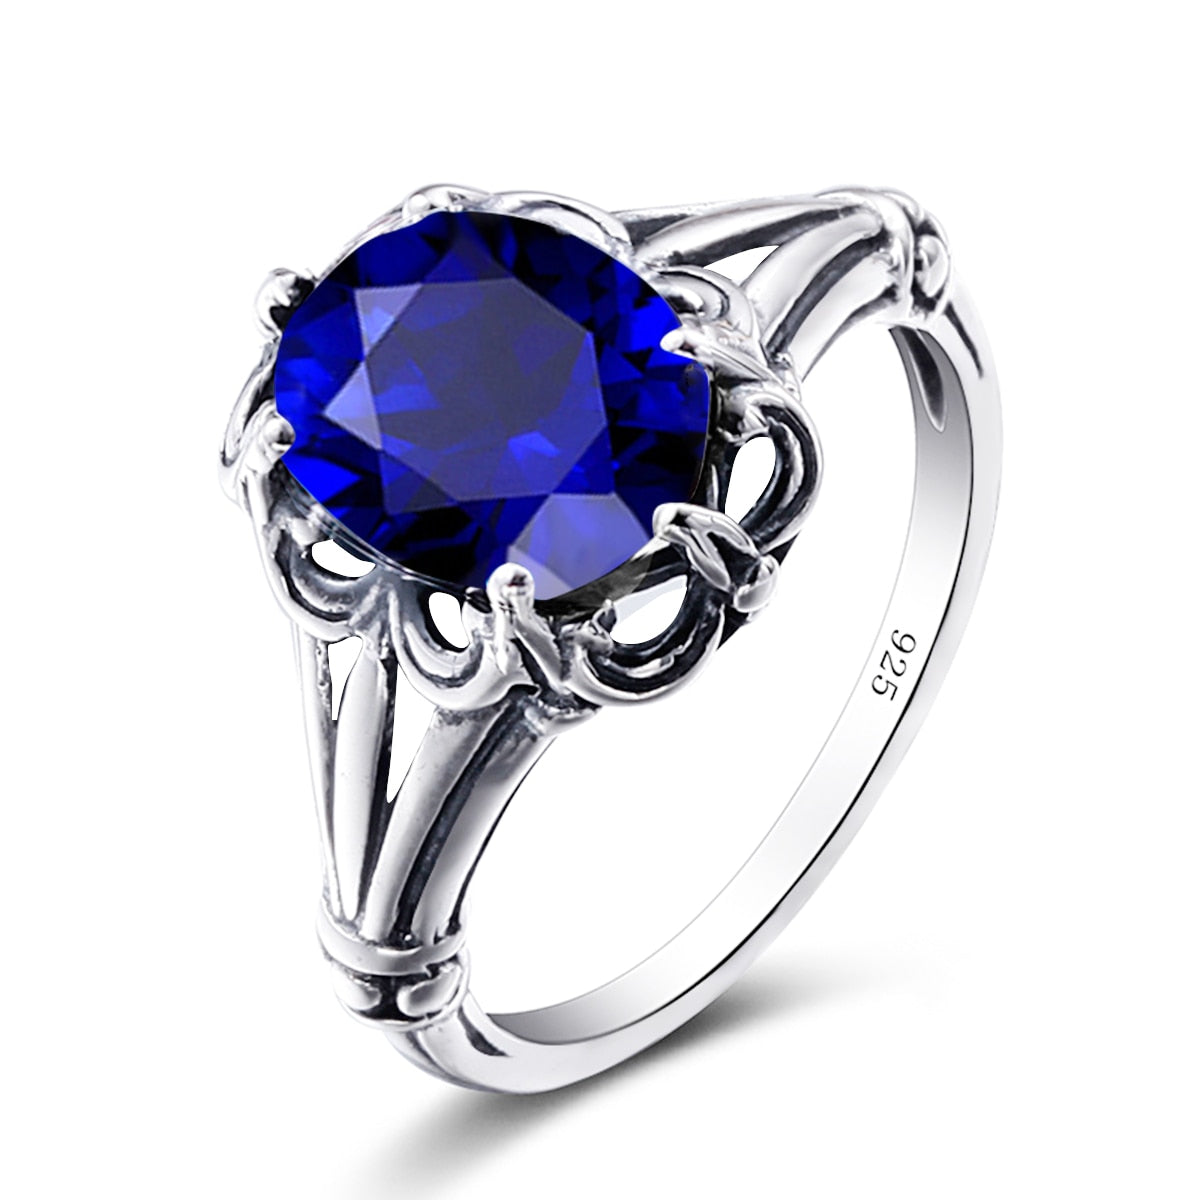 100% 925 Sterling Silver Rings Oval Design Garnet Bohemian Handmade Victoria Wieck Rings For Women Fine Jewelry Sapphire